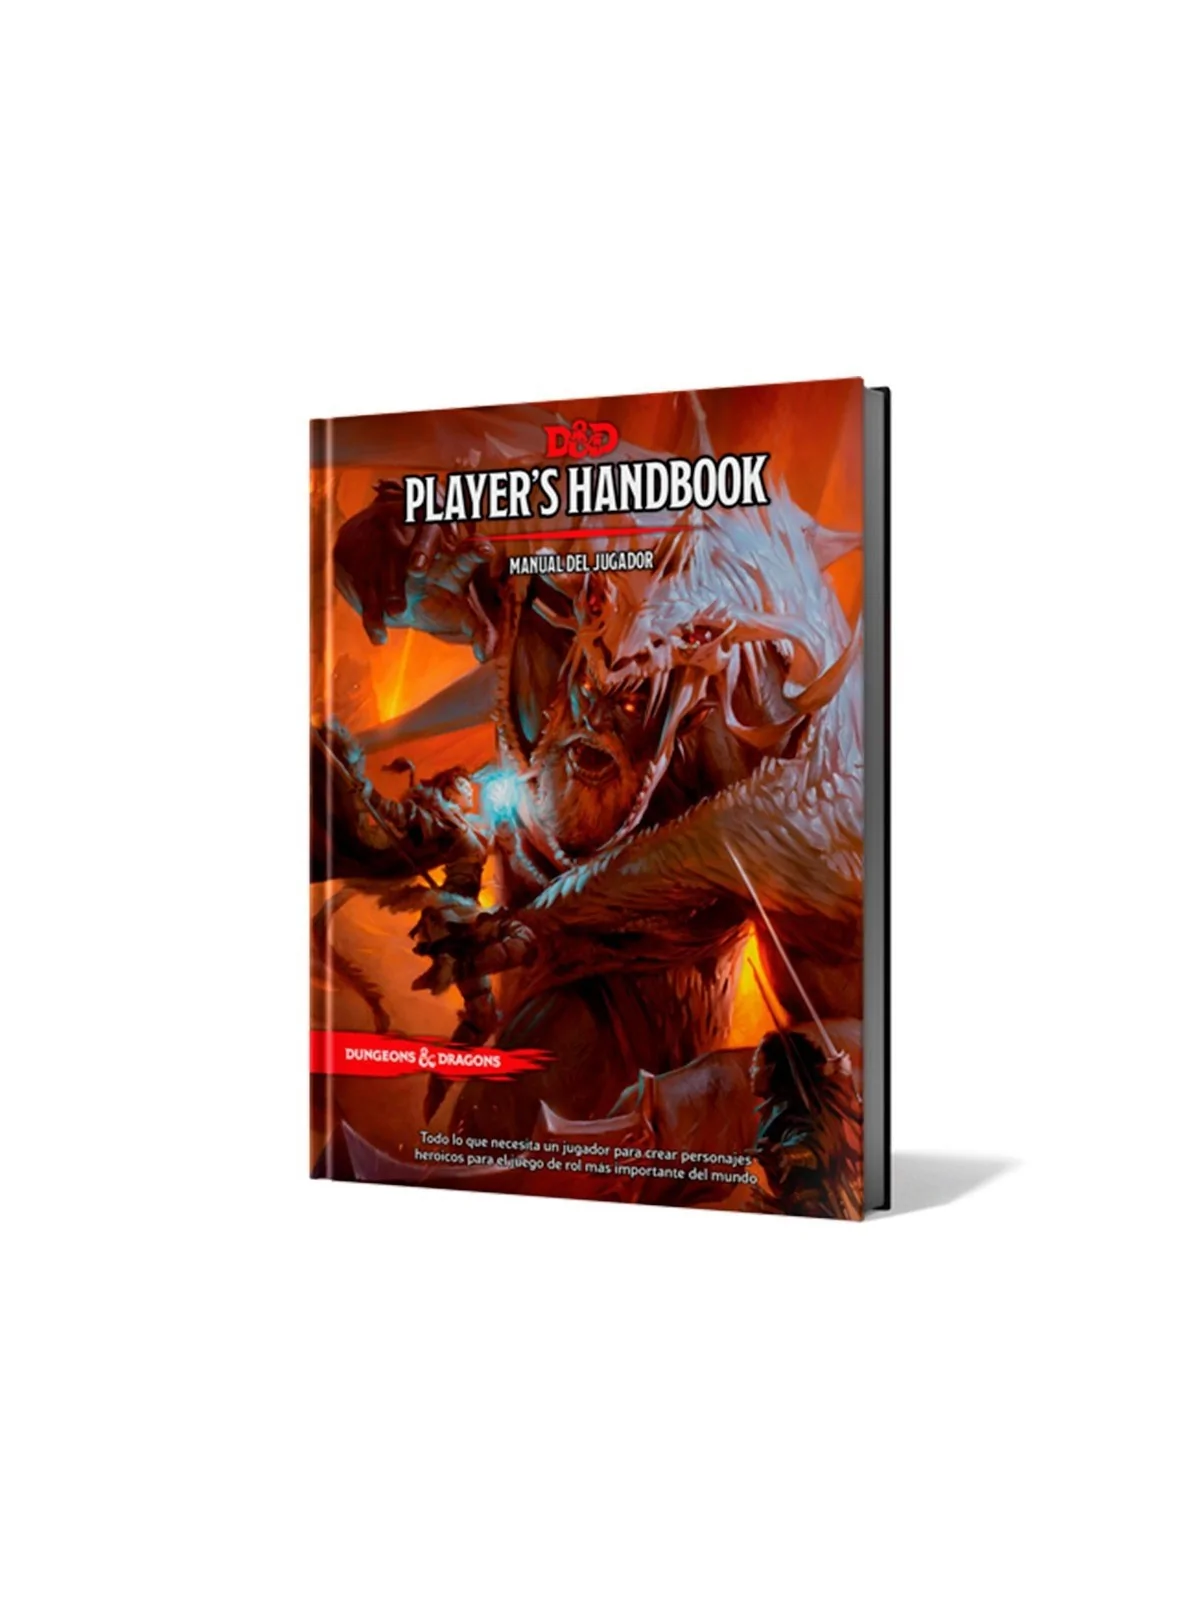 Comprar D&D Player's Handbook (Manual del Jugador) barato al mejor pre